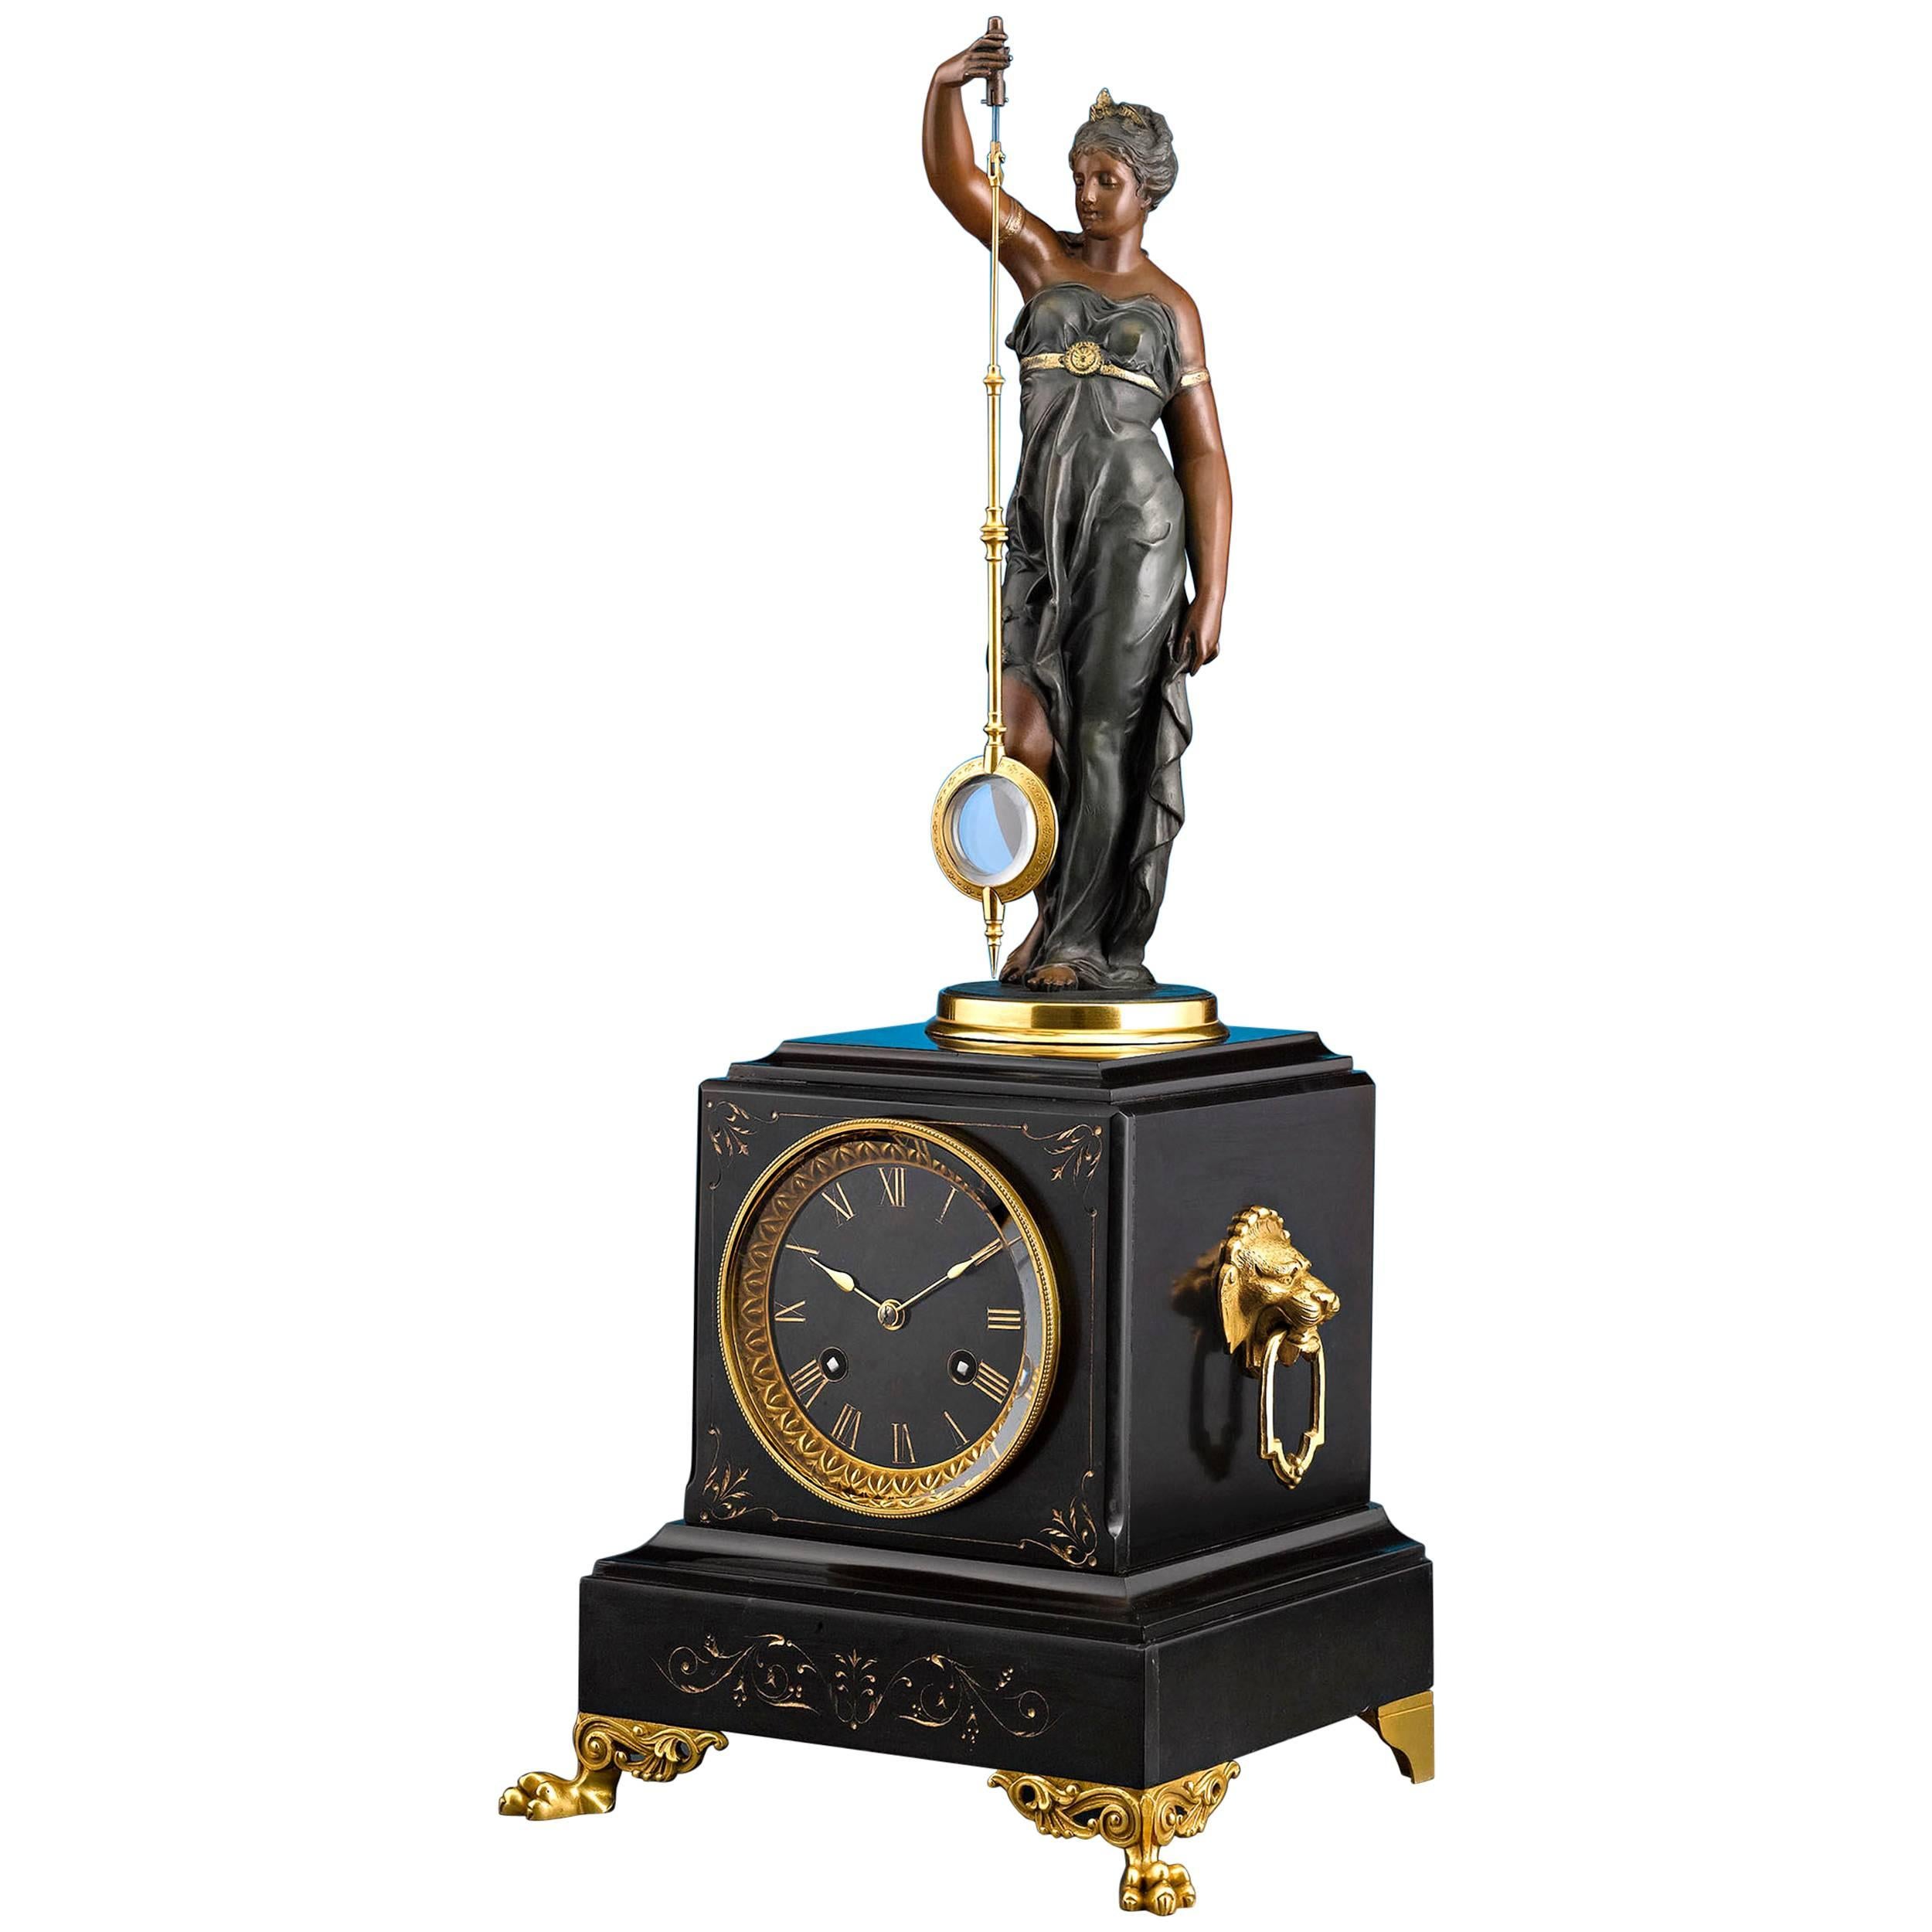 A. R. Guilmet Mystery Clock